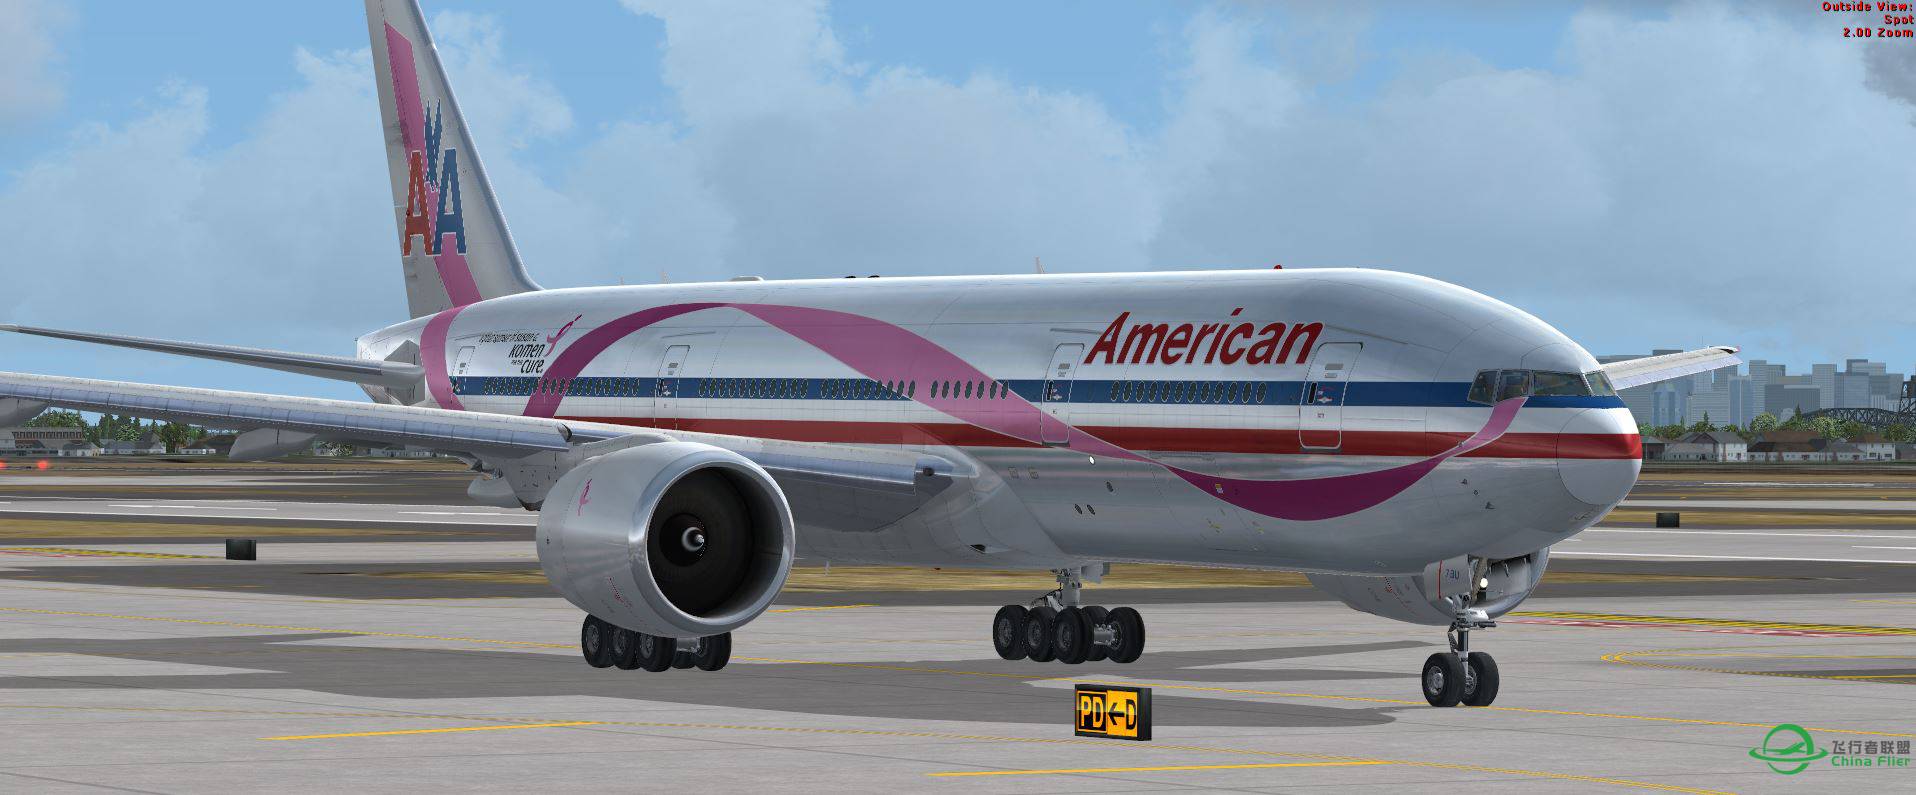 B777 American Airline-532 